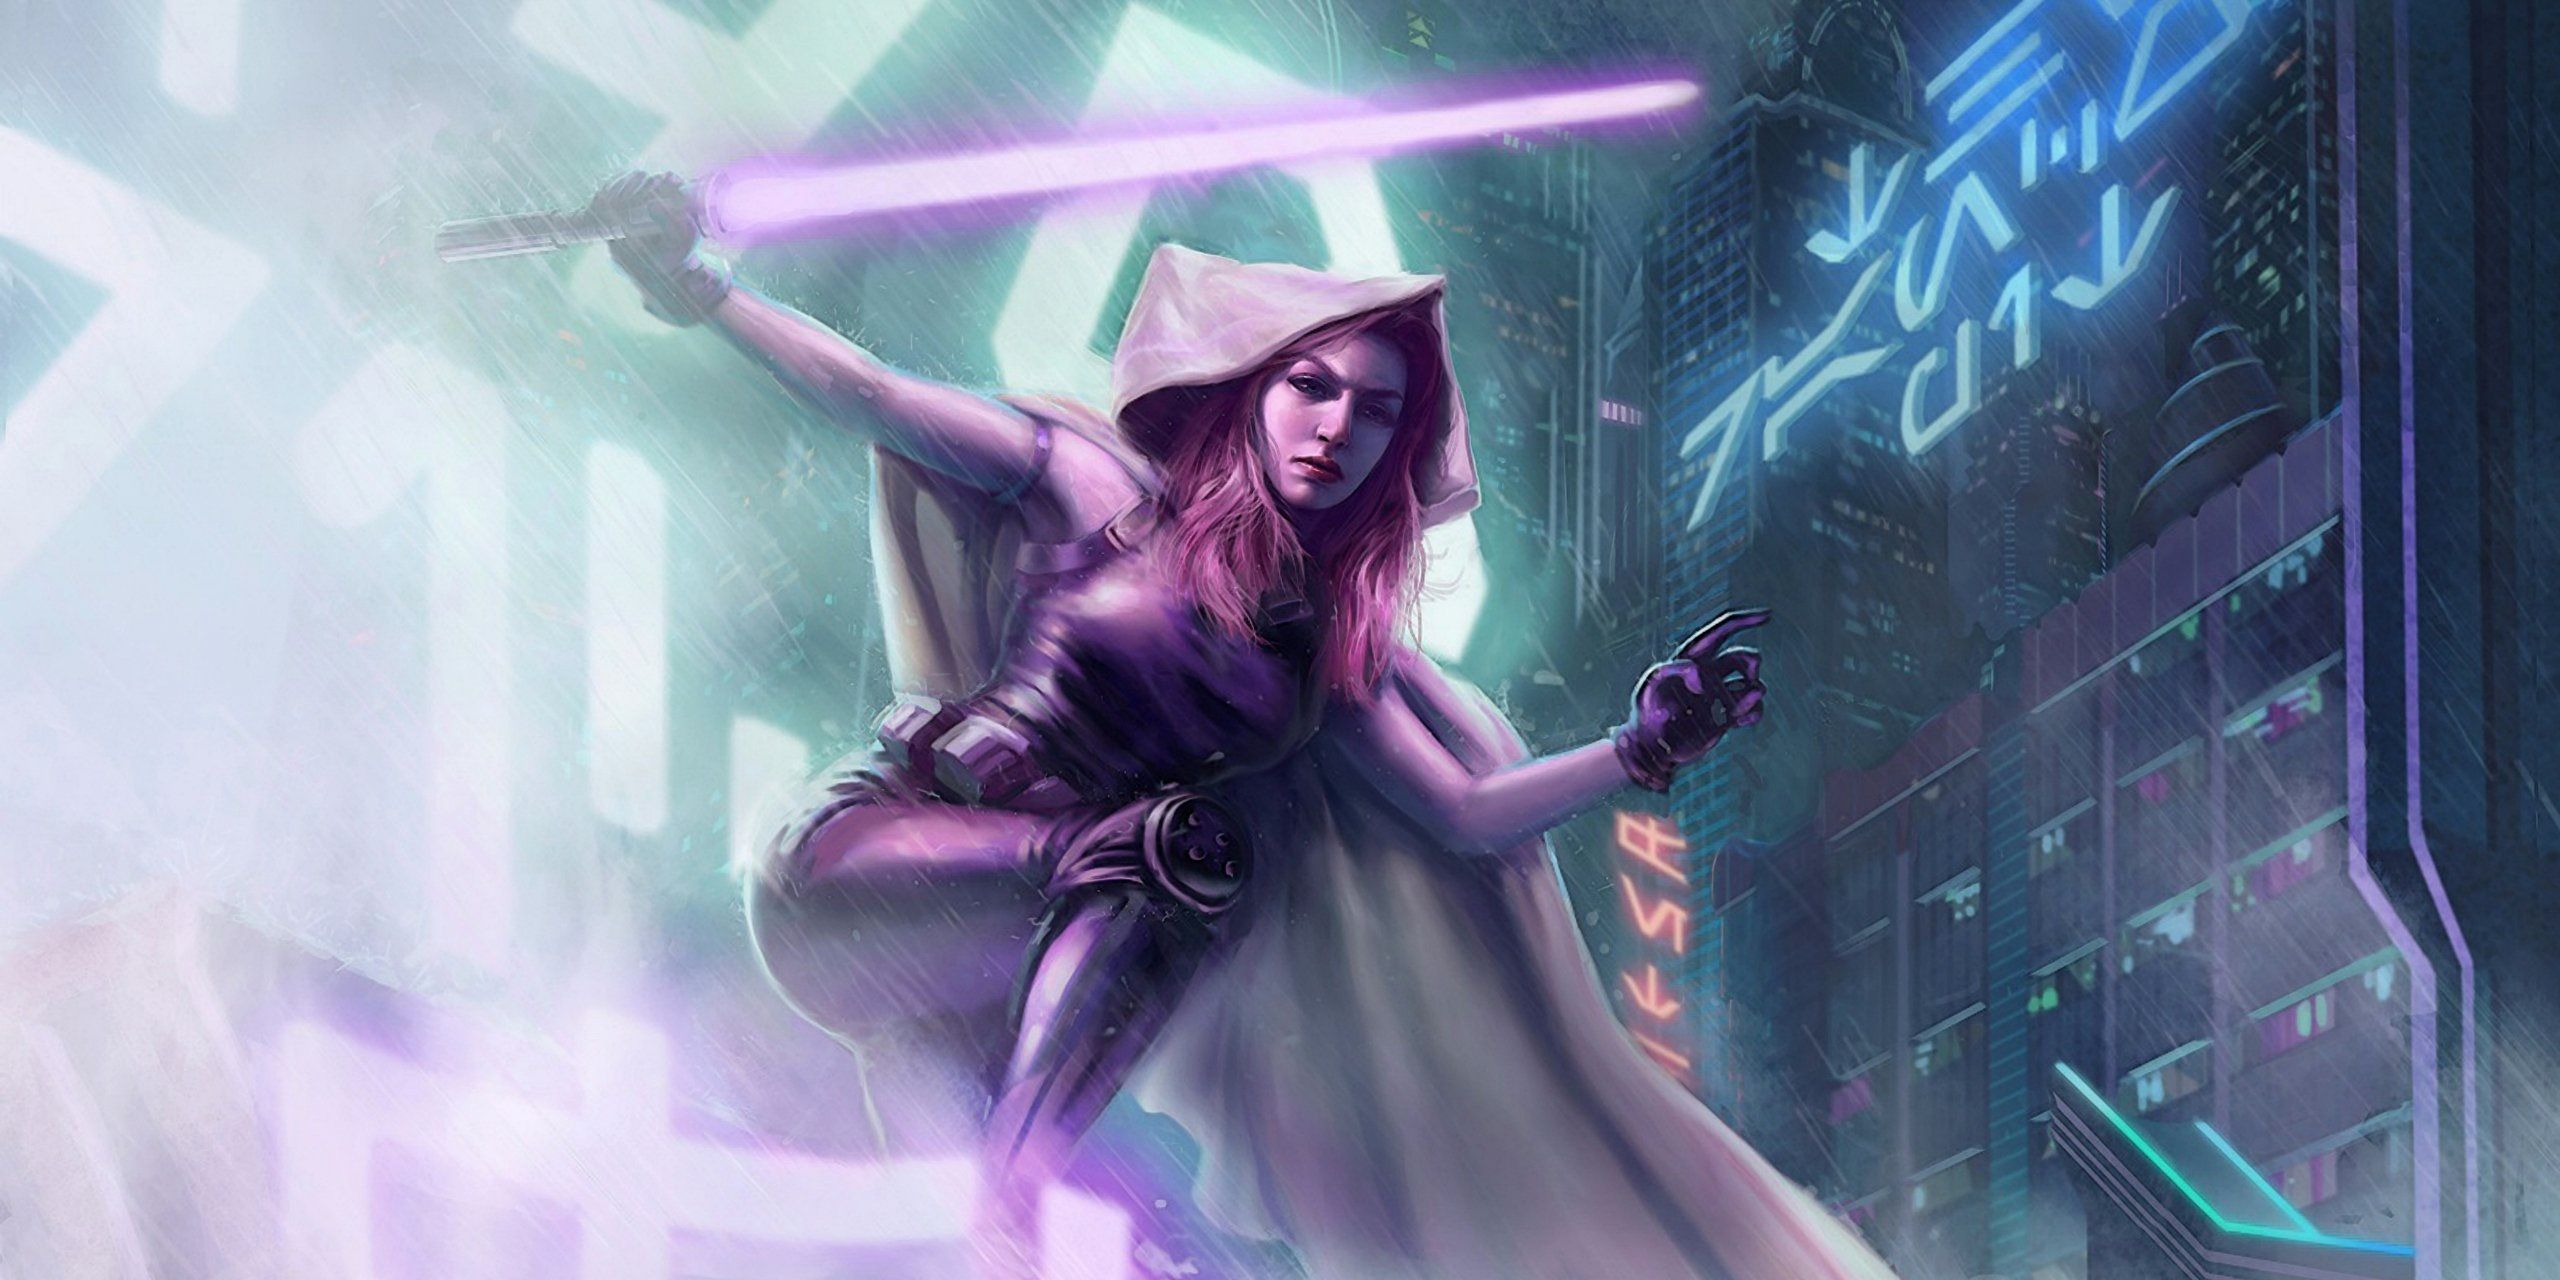 Mara Jade fighting with her purple lightsaber. 